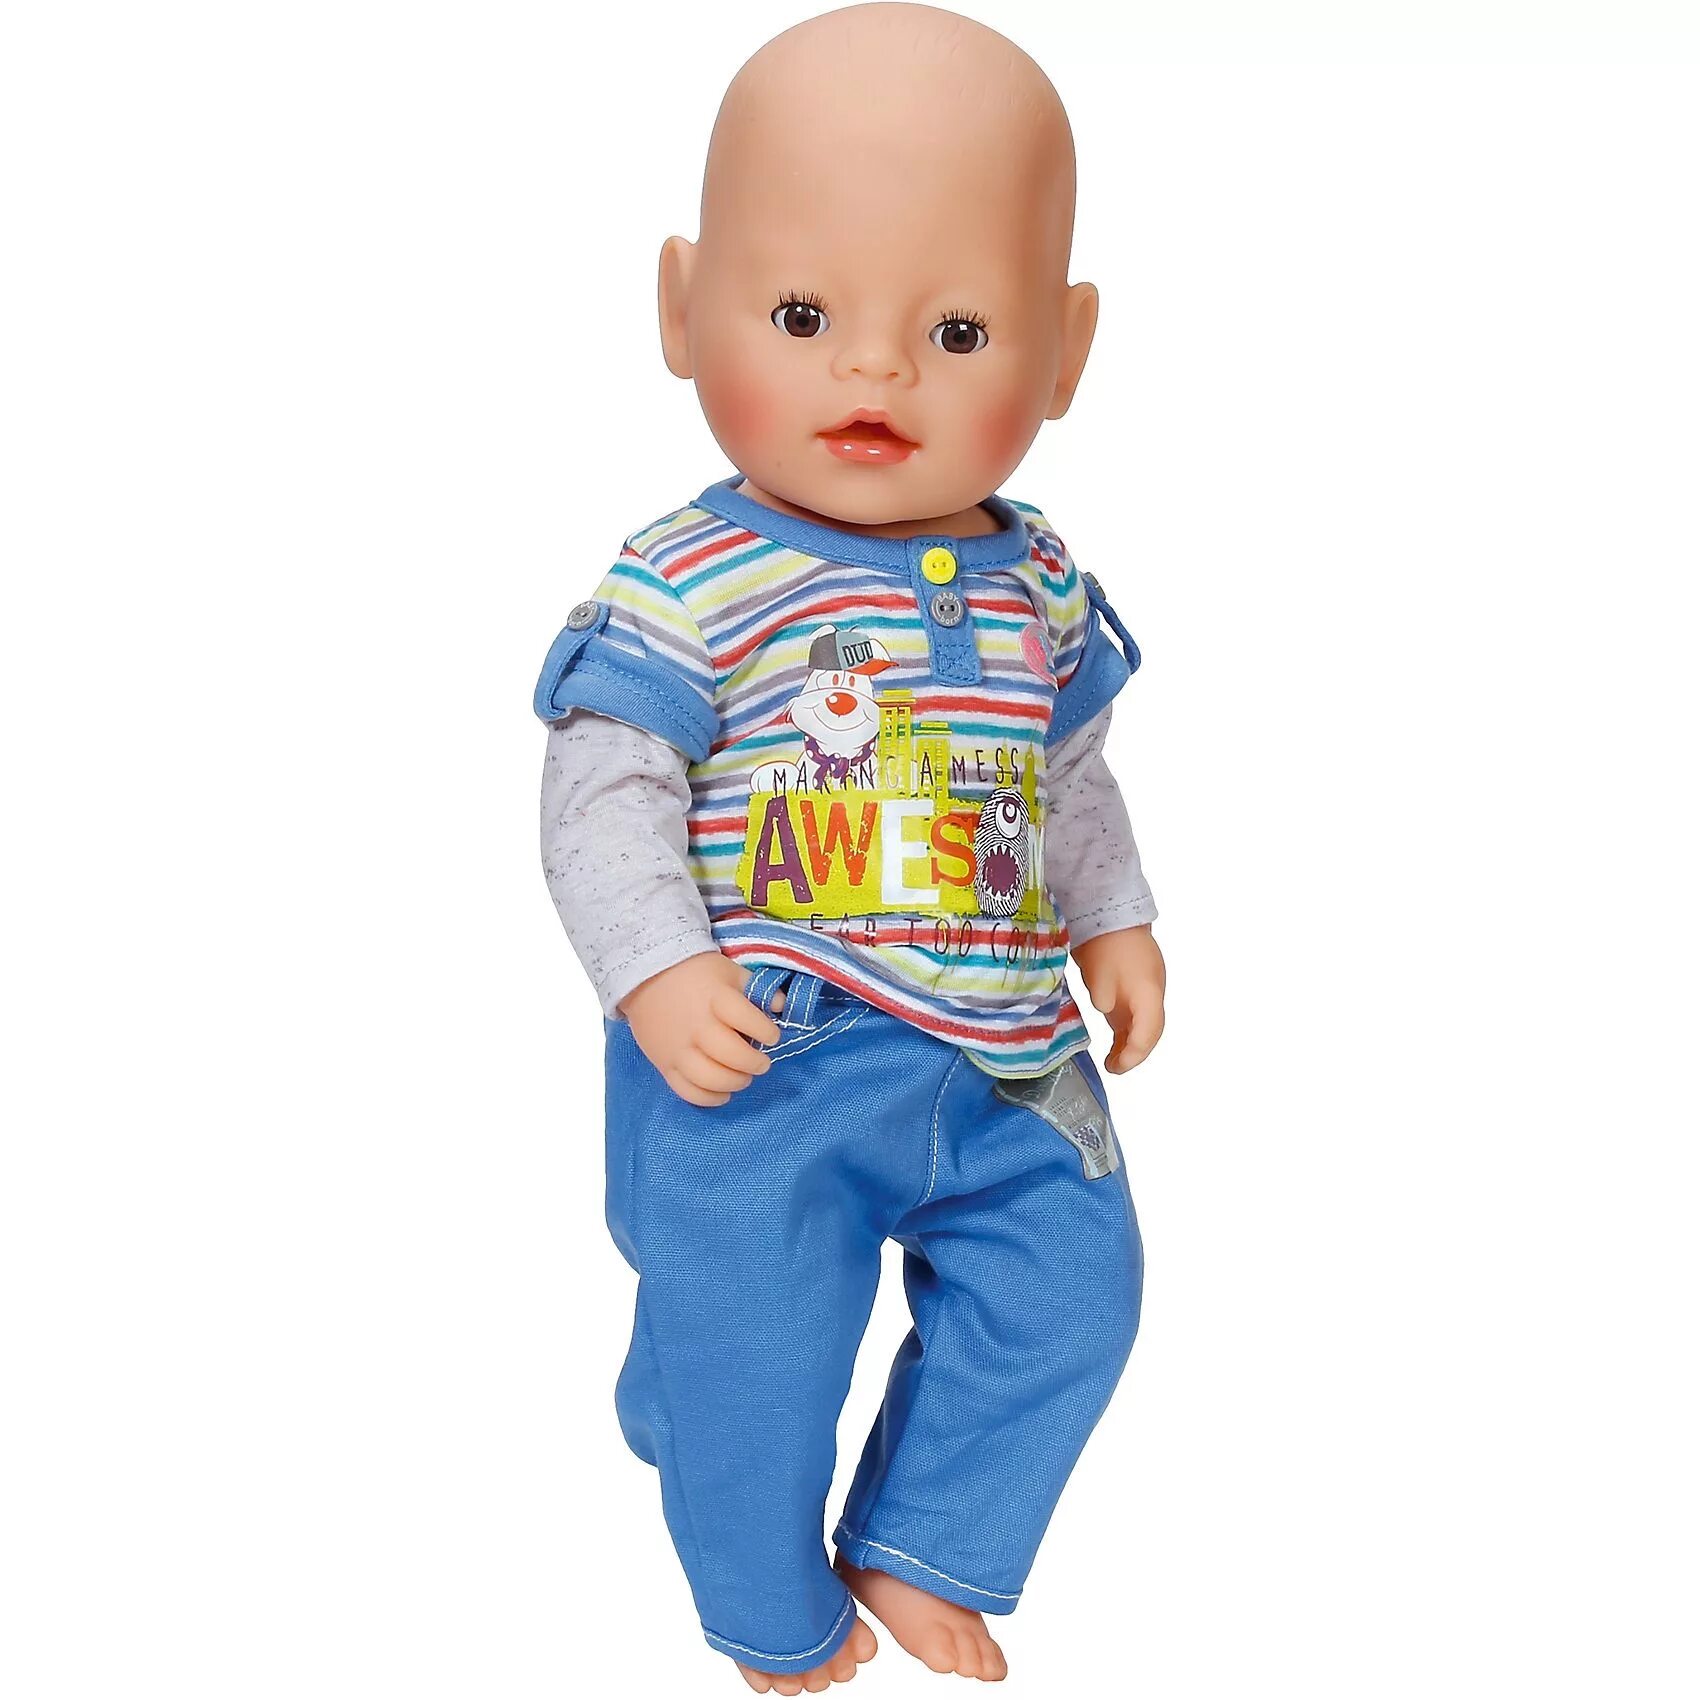 Кукла пупс одежда для кукол. Пупс бэби Борн мальчик. Zapf Creation комплект одежды для мальчика Baby born 822197. Одежда для кукол Беби Борн для мальчиков. Костюм для куклы Беби Борн мальчик.